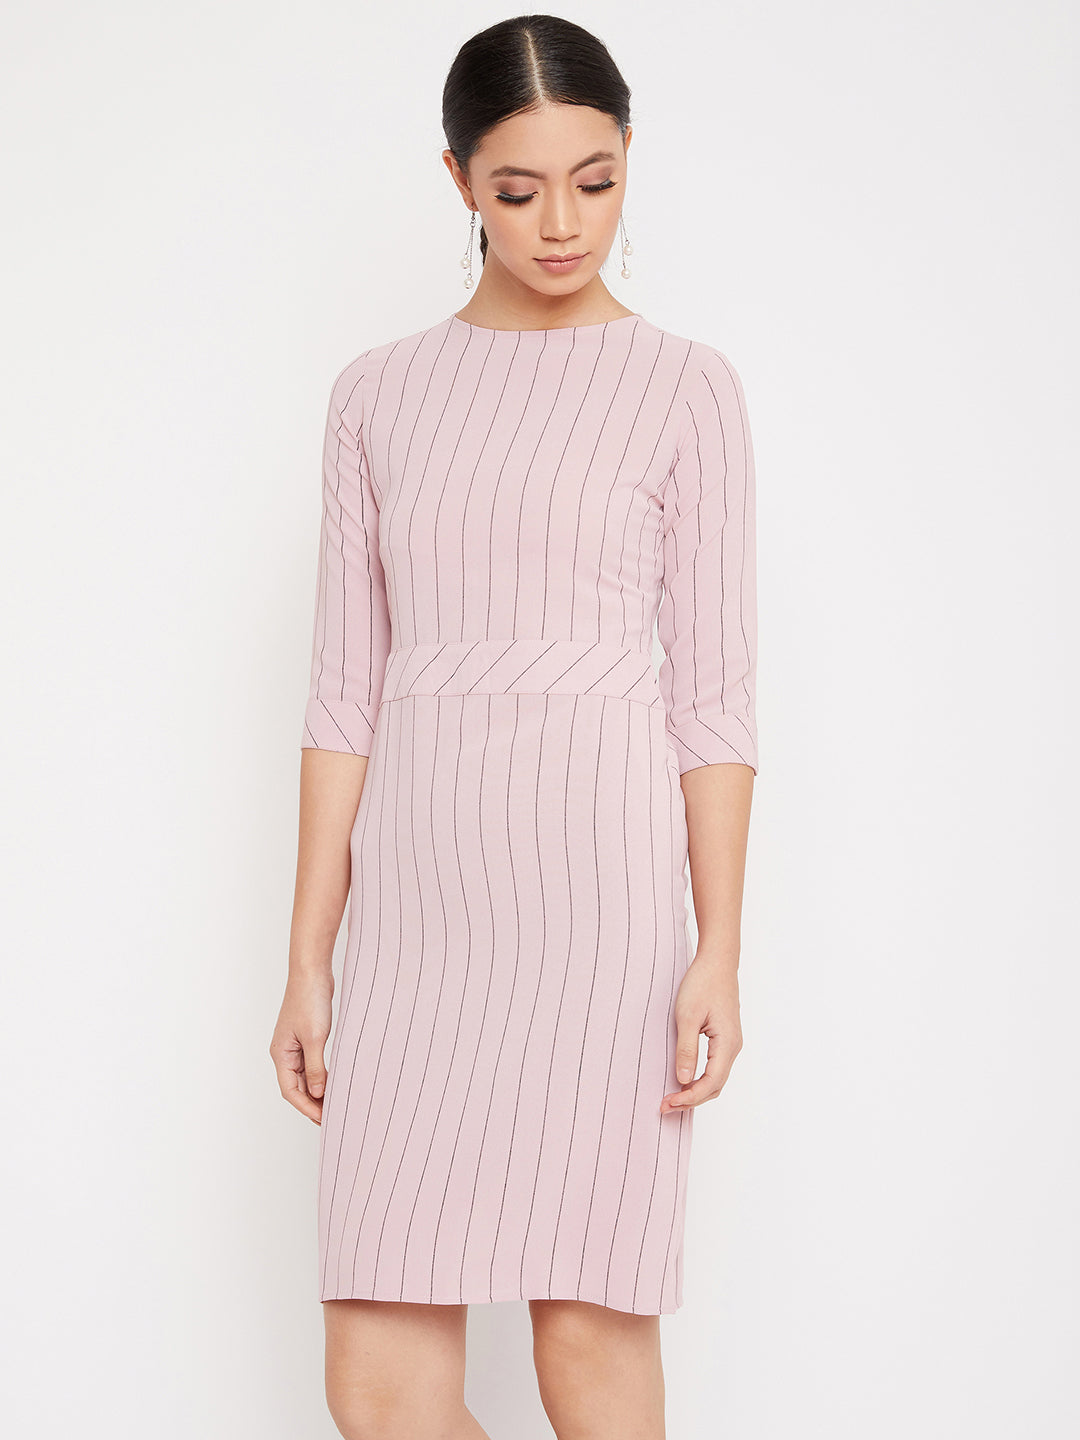 Pink Striped Dress - Women Dresses